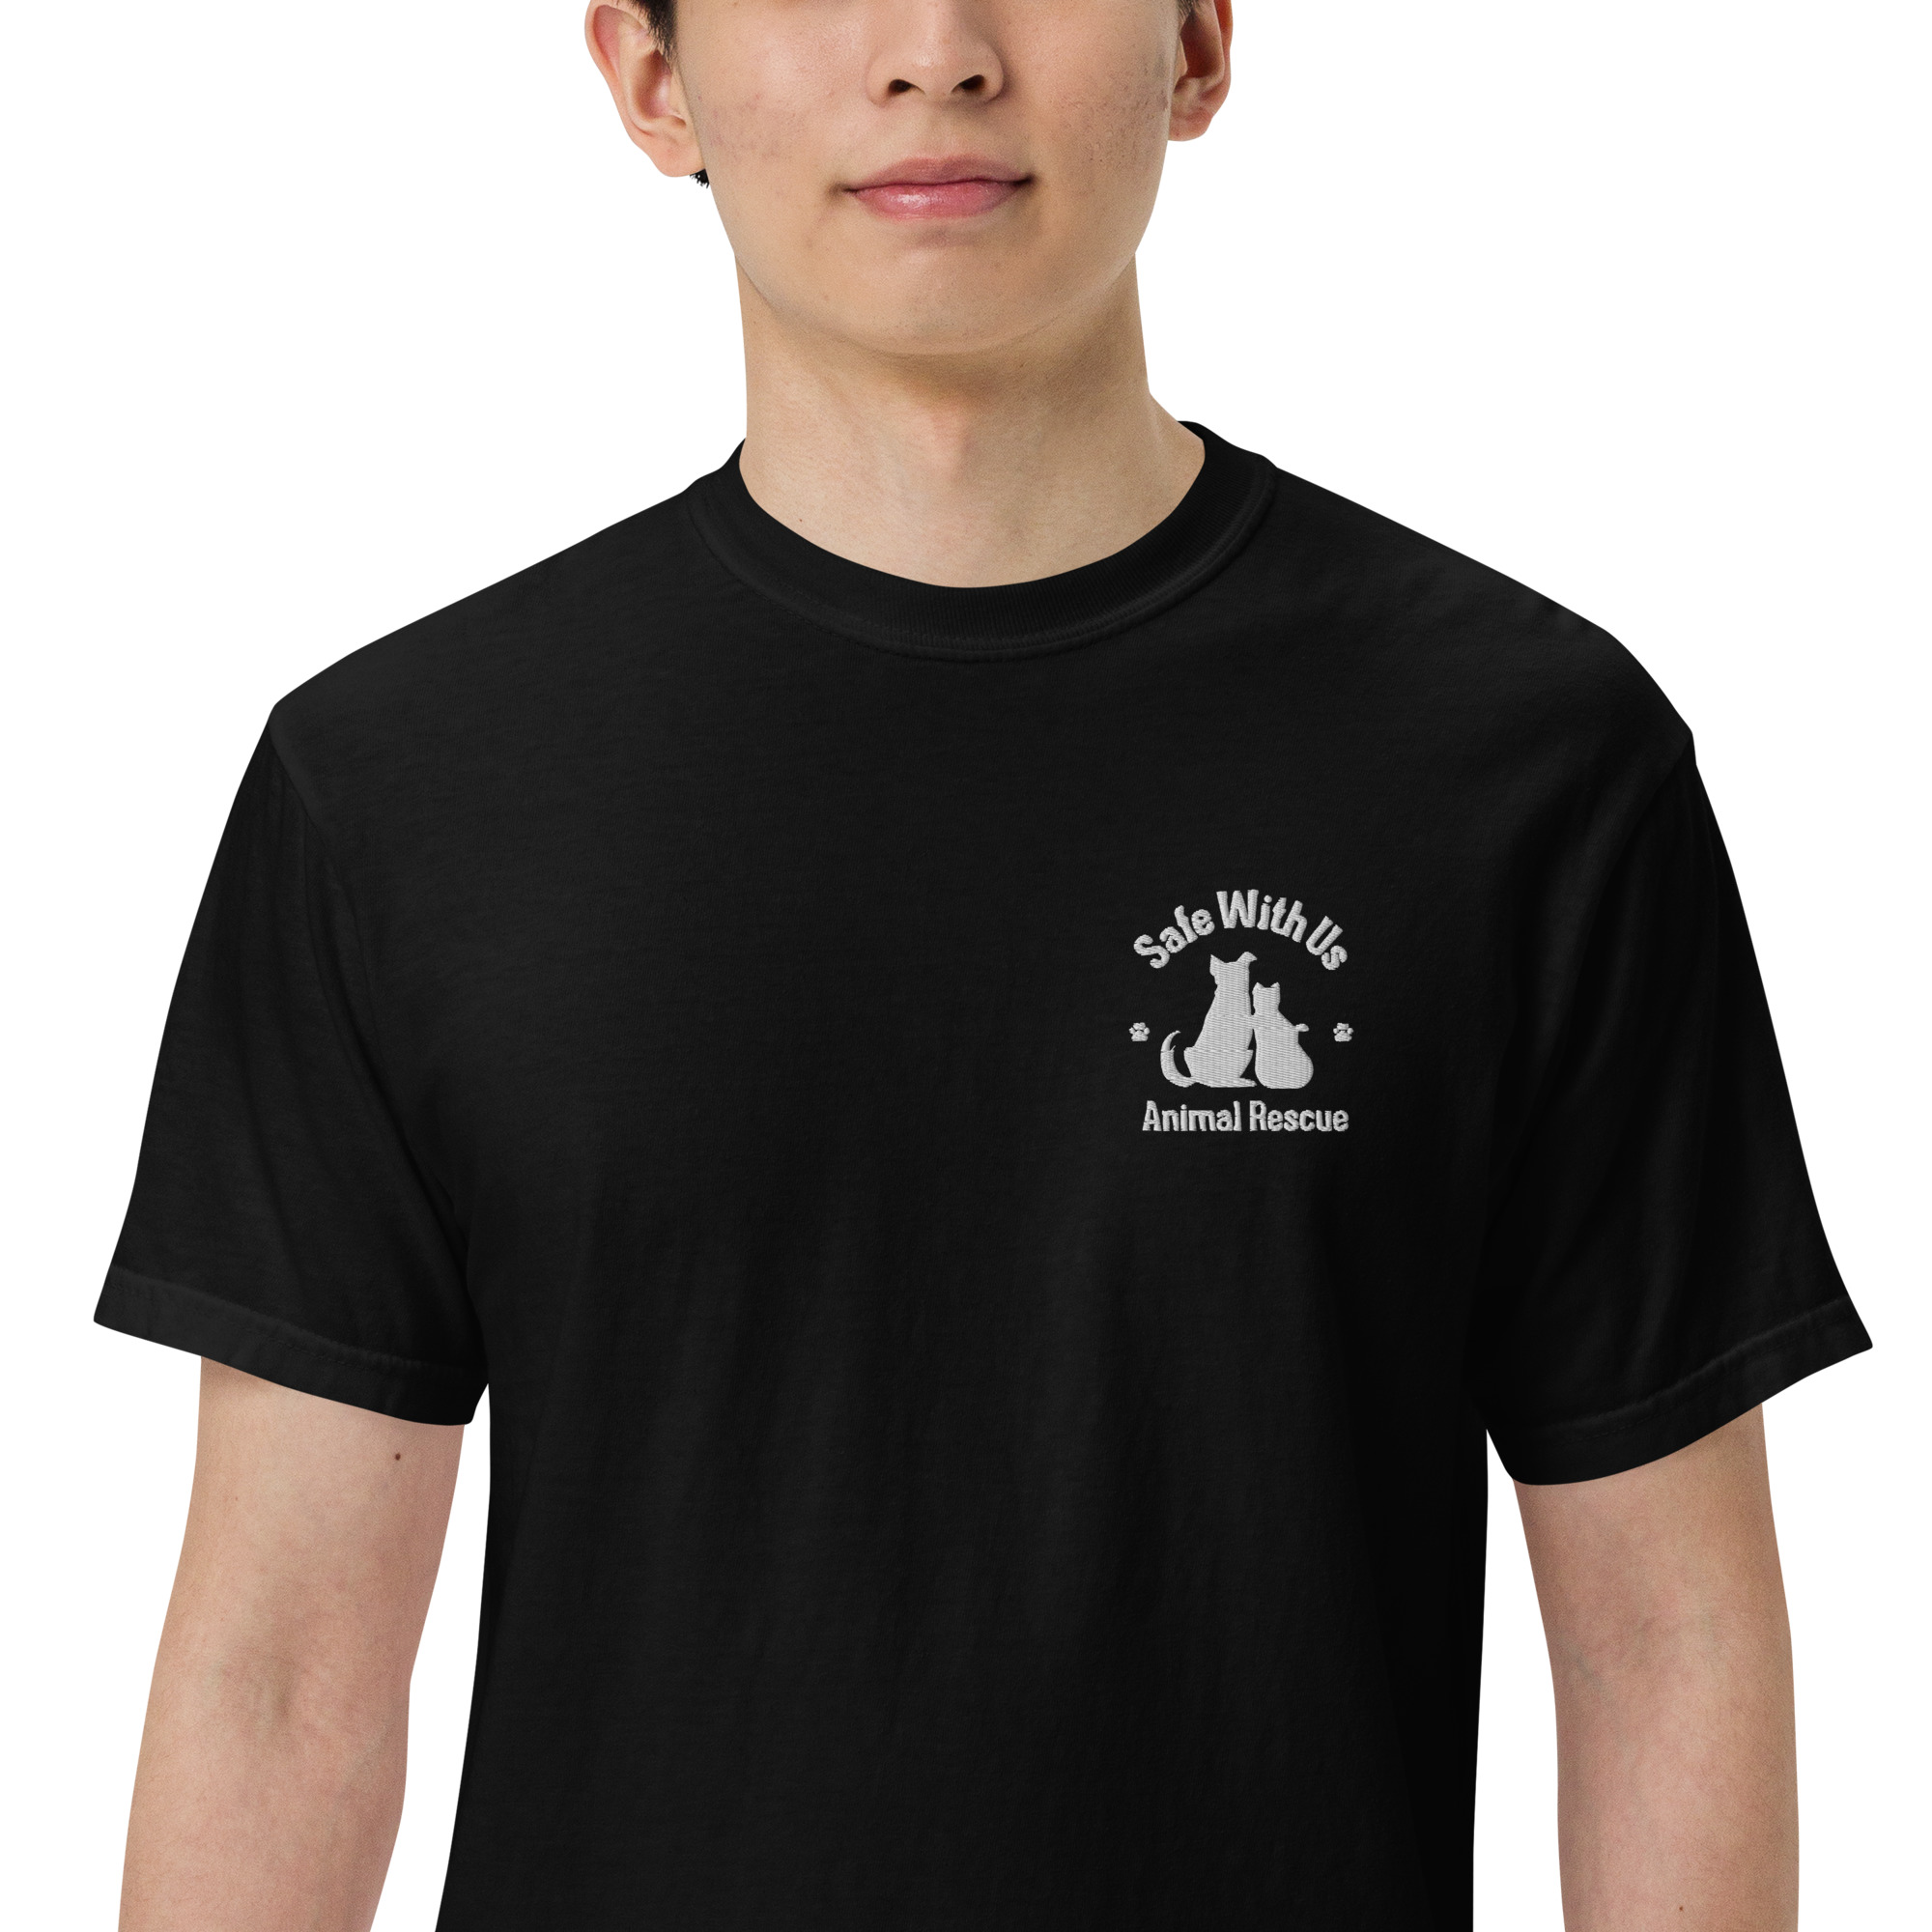 mens-garment-dyed-heavyweight-t-shirt-black-zoomed-in-6415fedc241b7.jpg